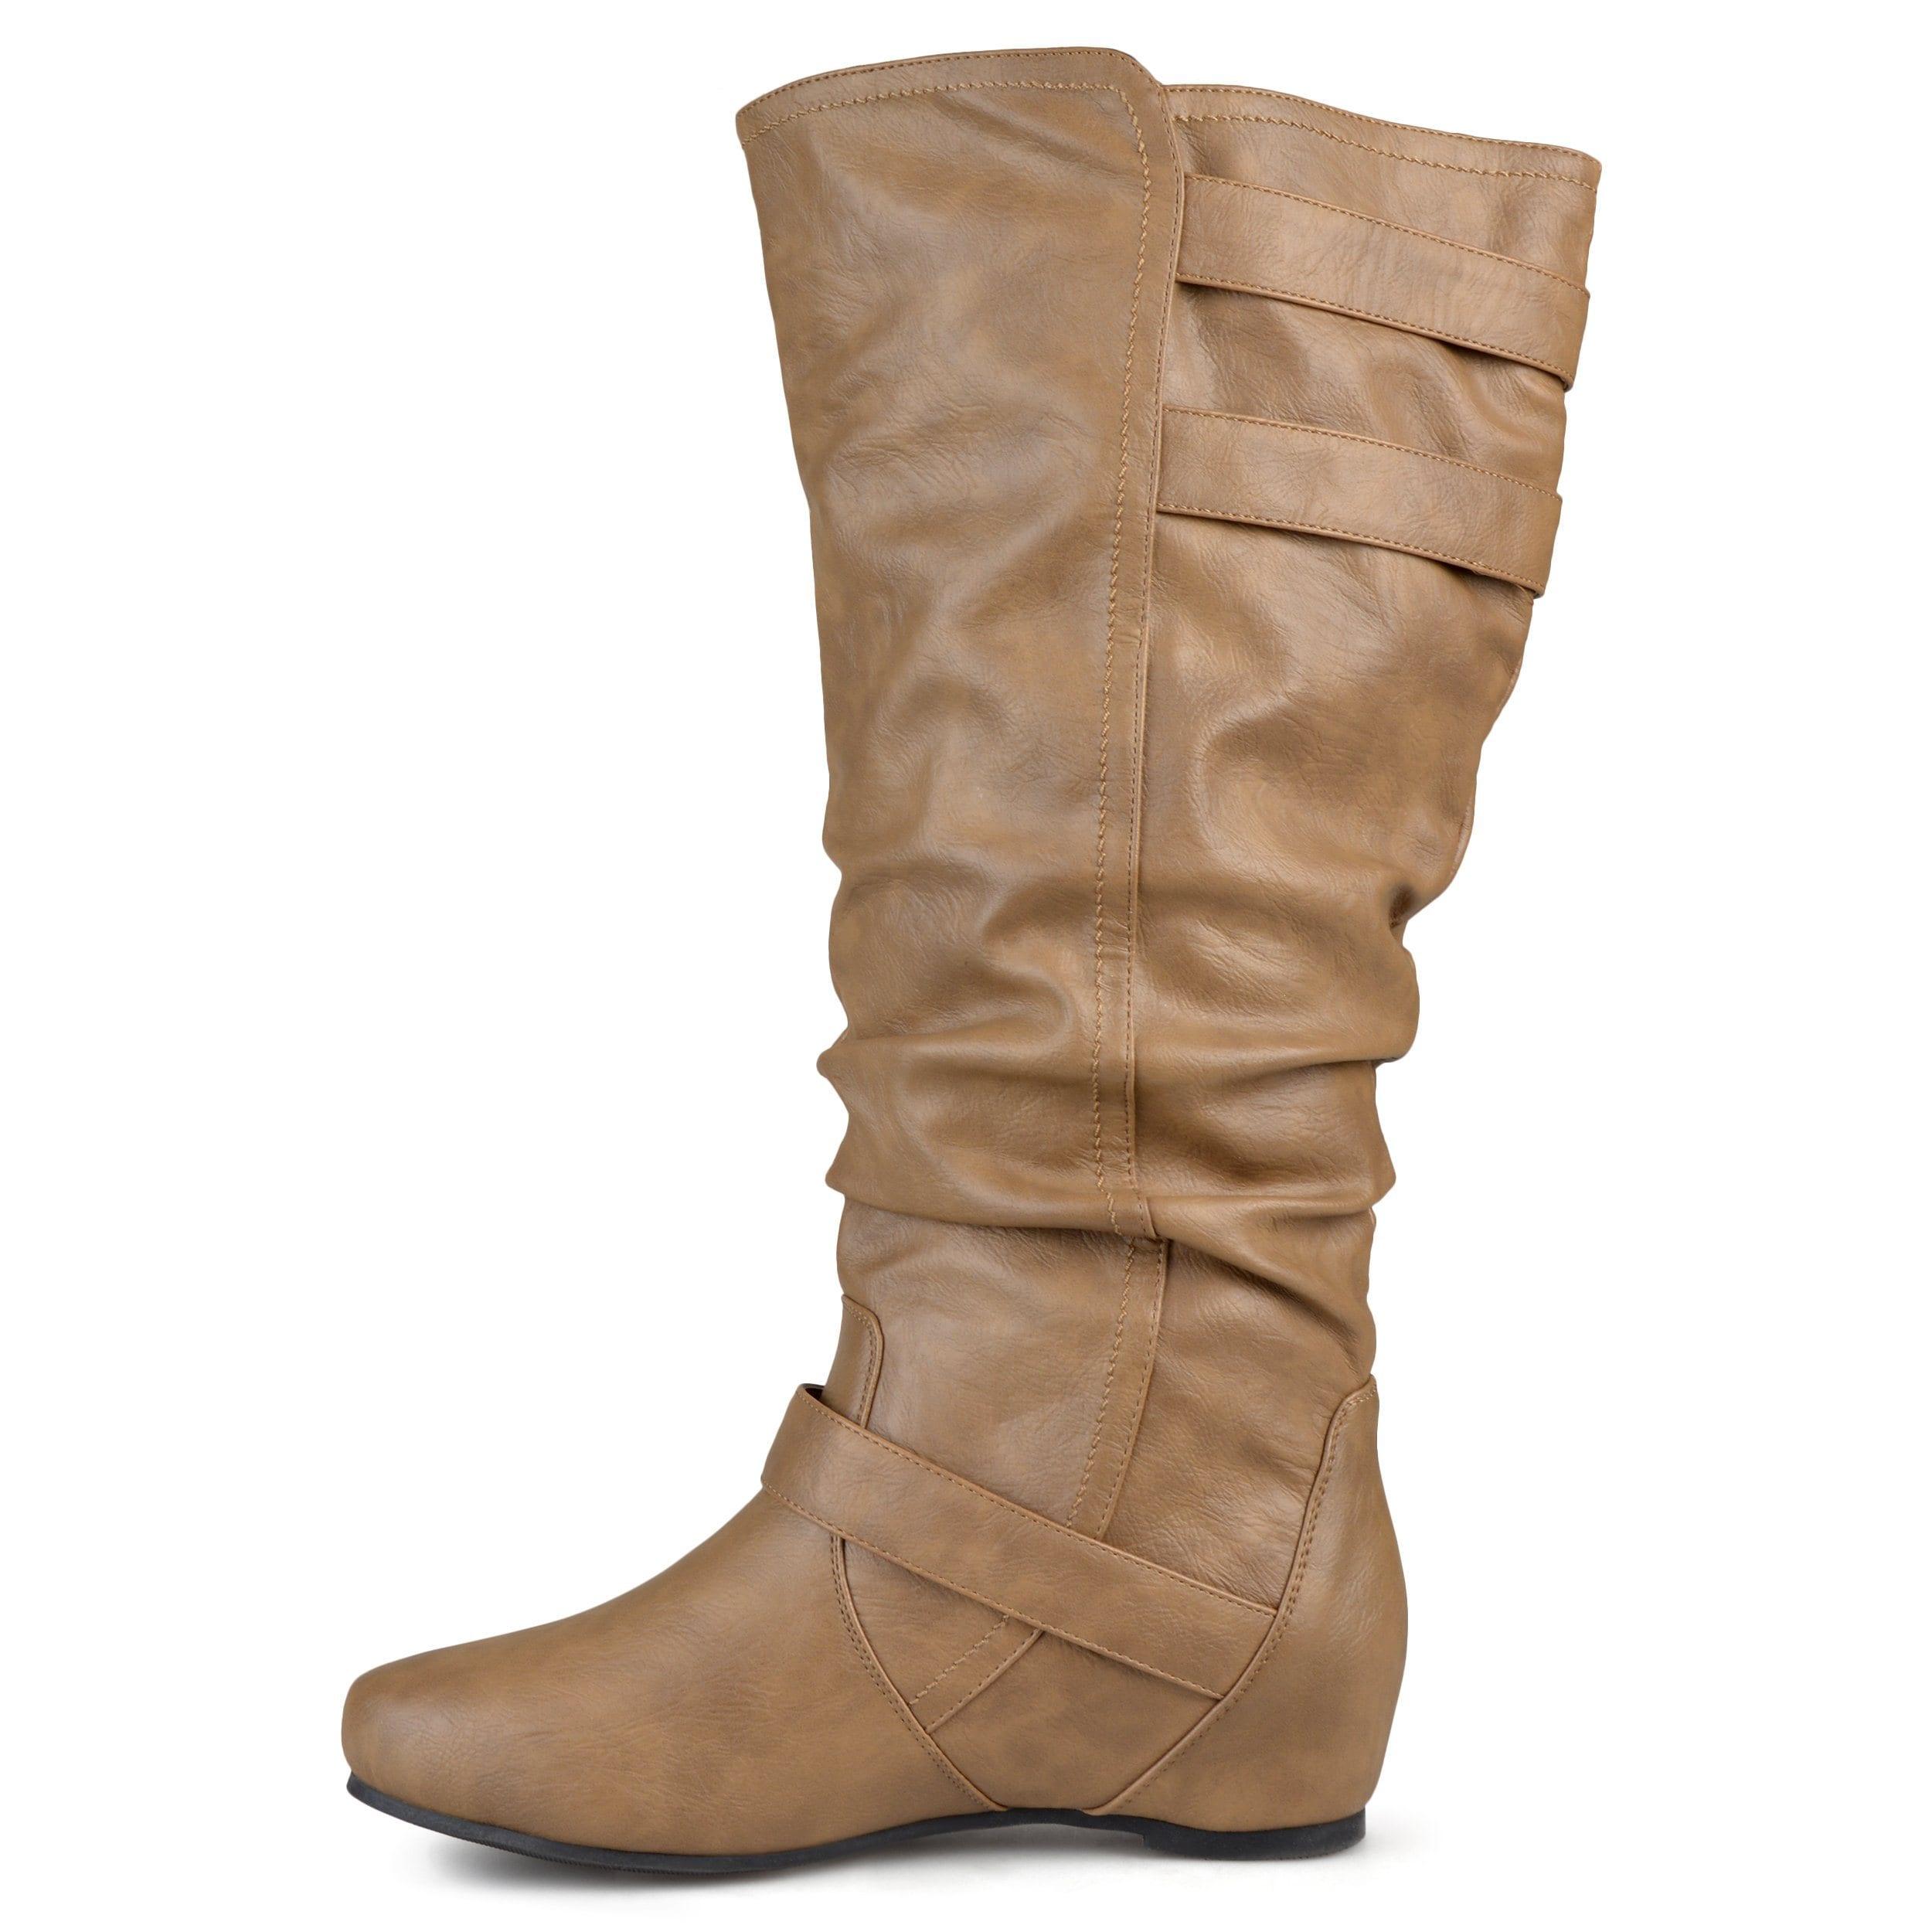 Extra Wide Calf Boot - Tori  Wide calf boots, Extra wide calf boots, Boots